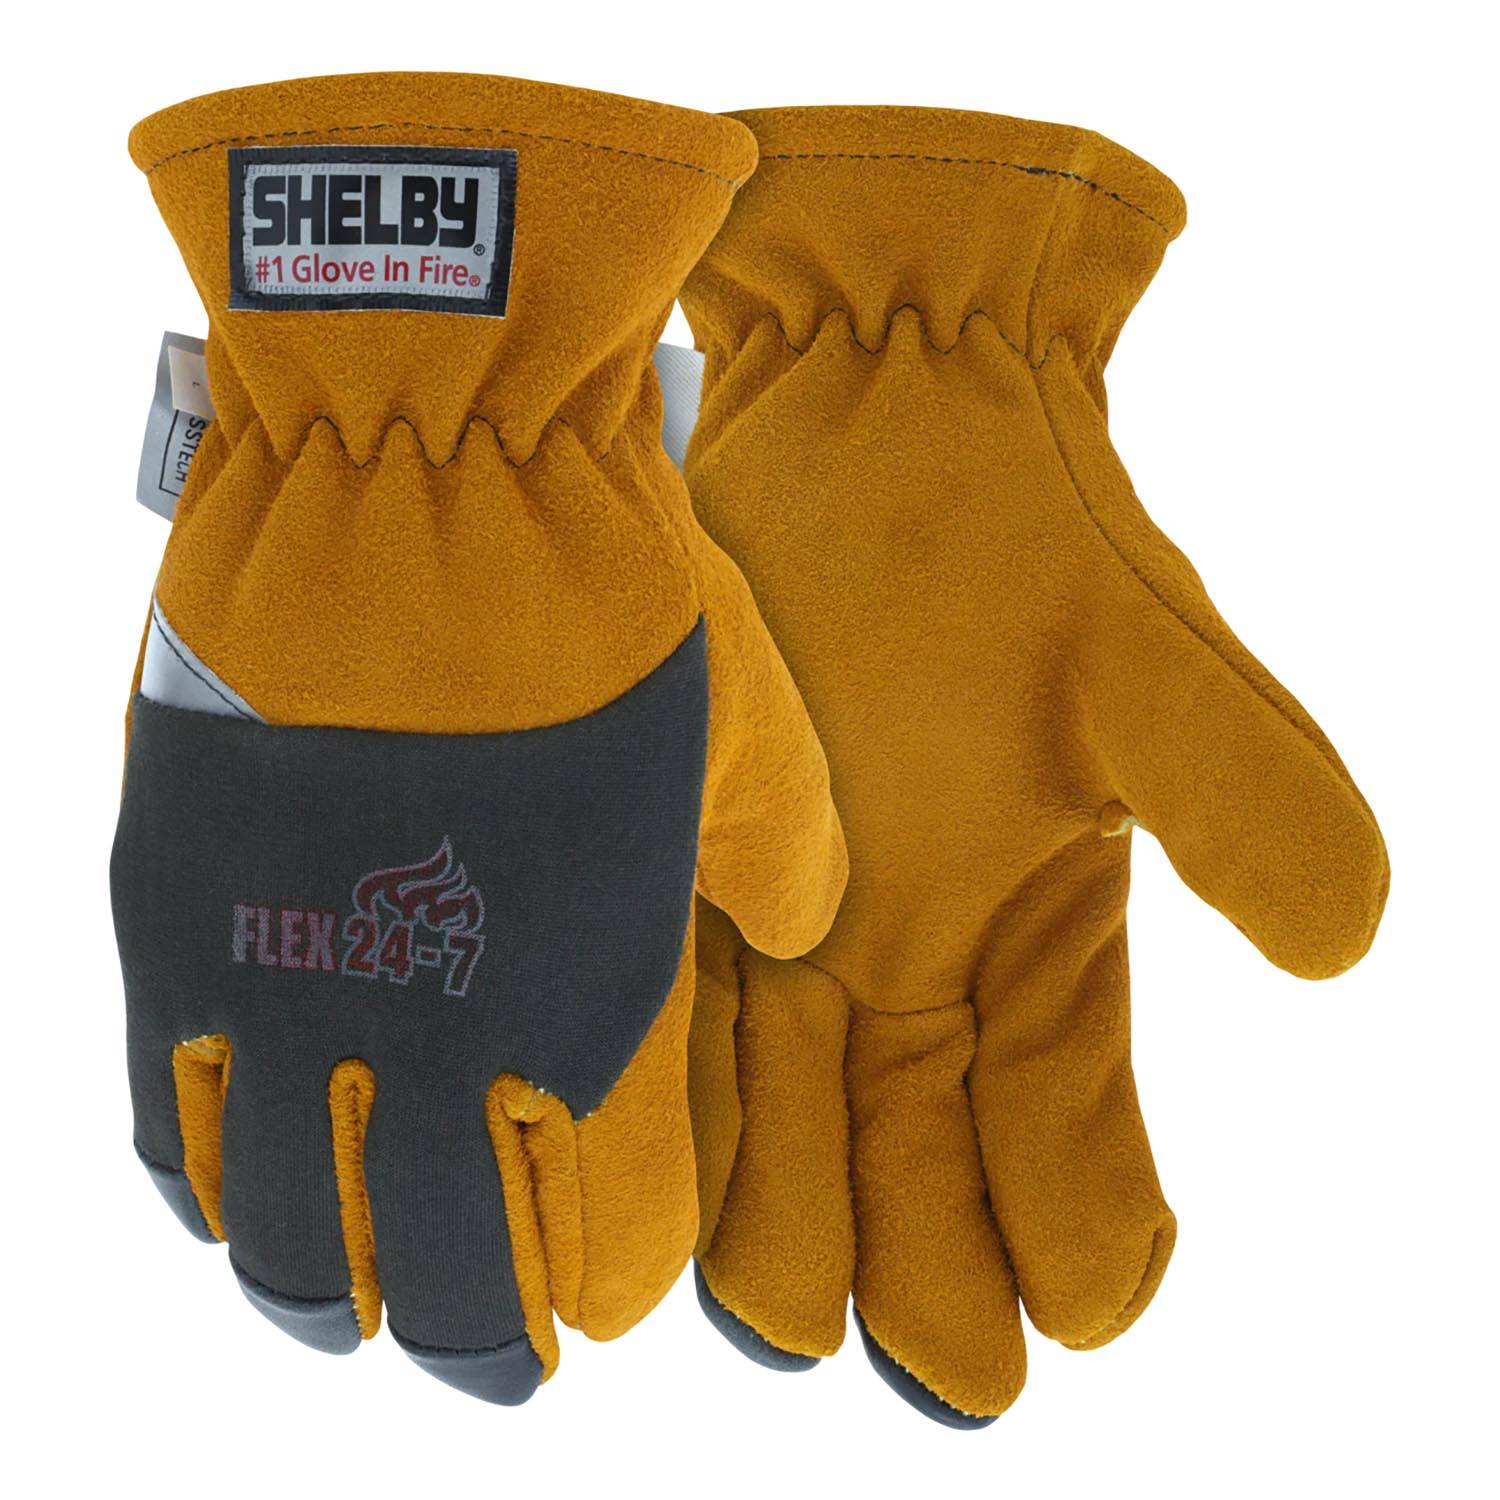 Shelby Flex 24-7 Gauntlet Fire Gloves